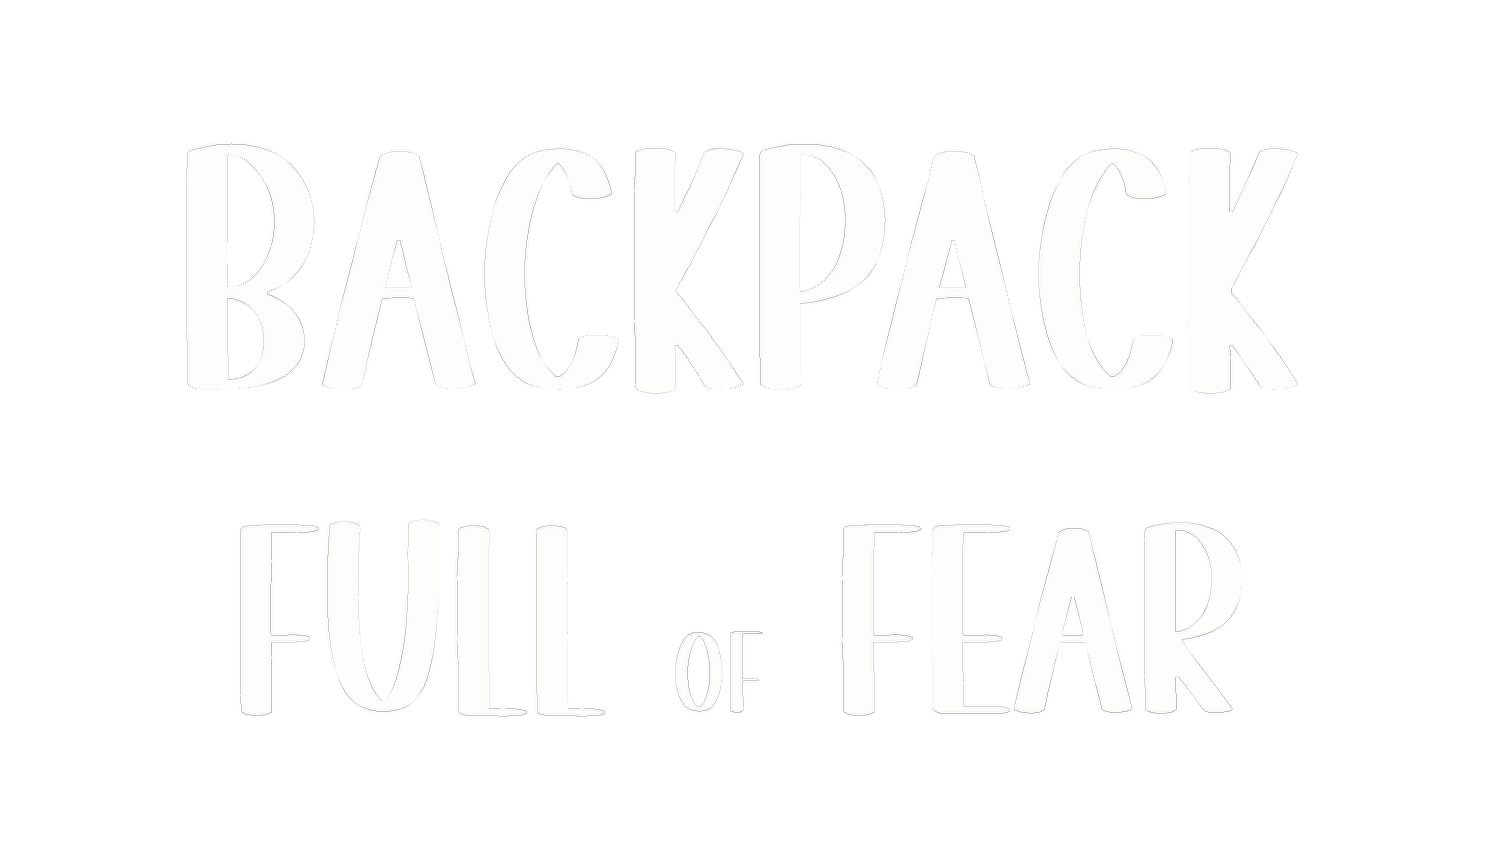 Backpack Full of Fear